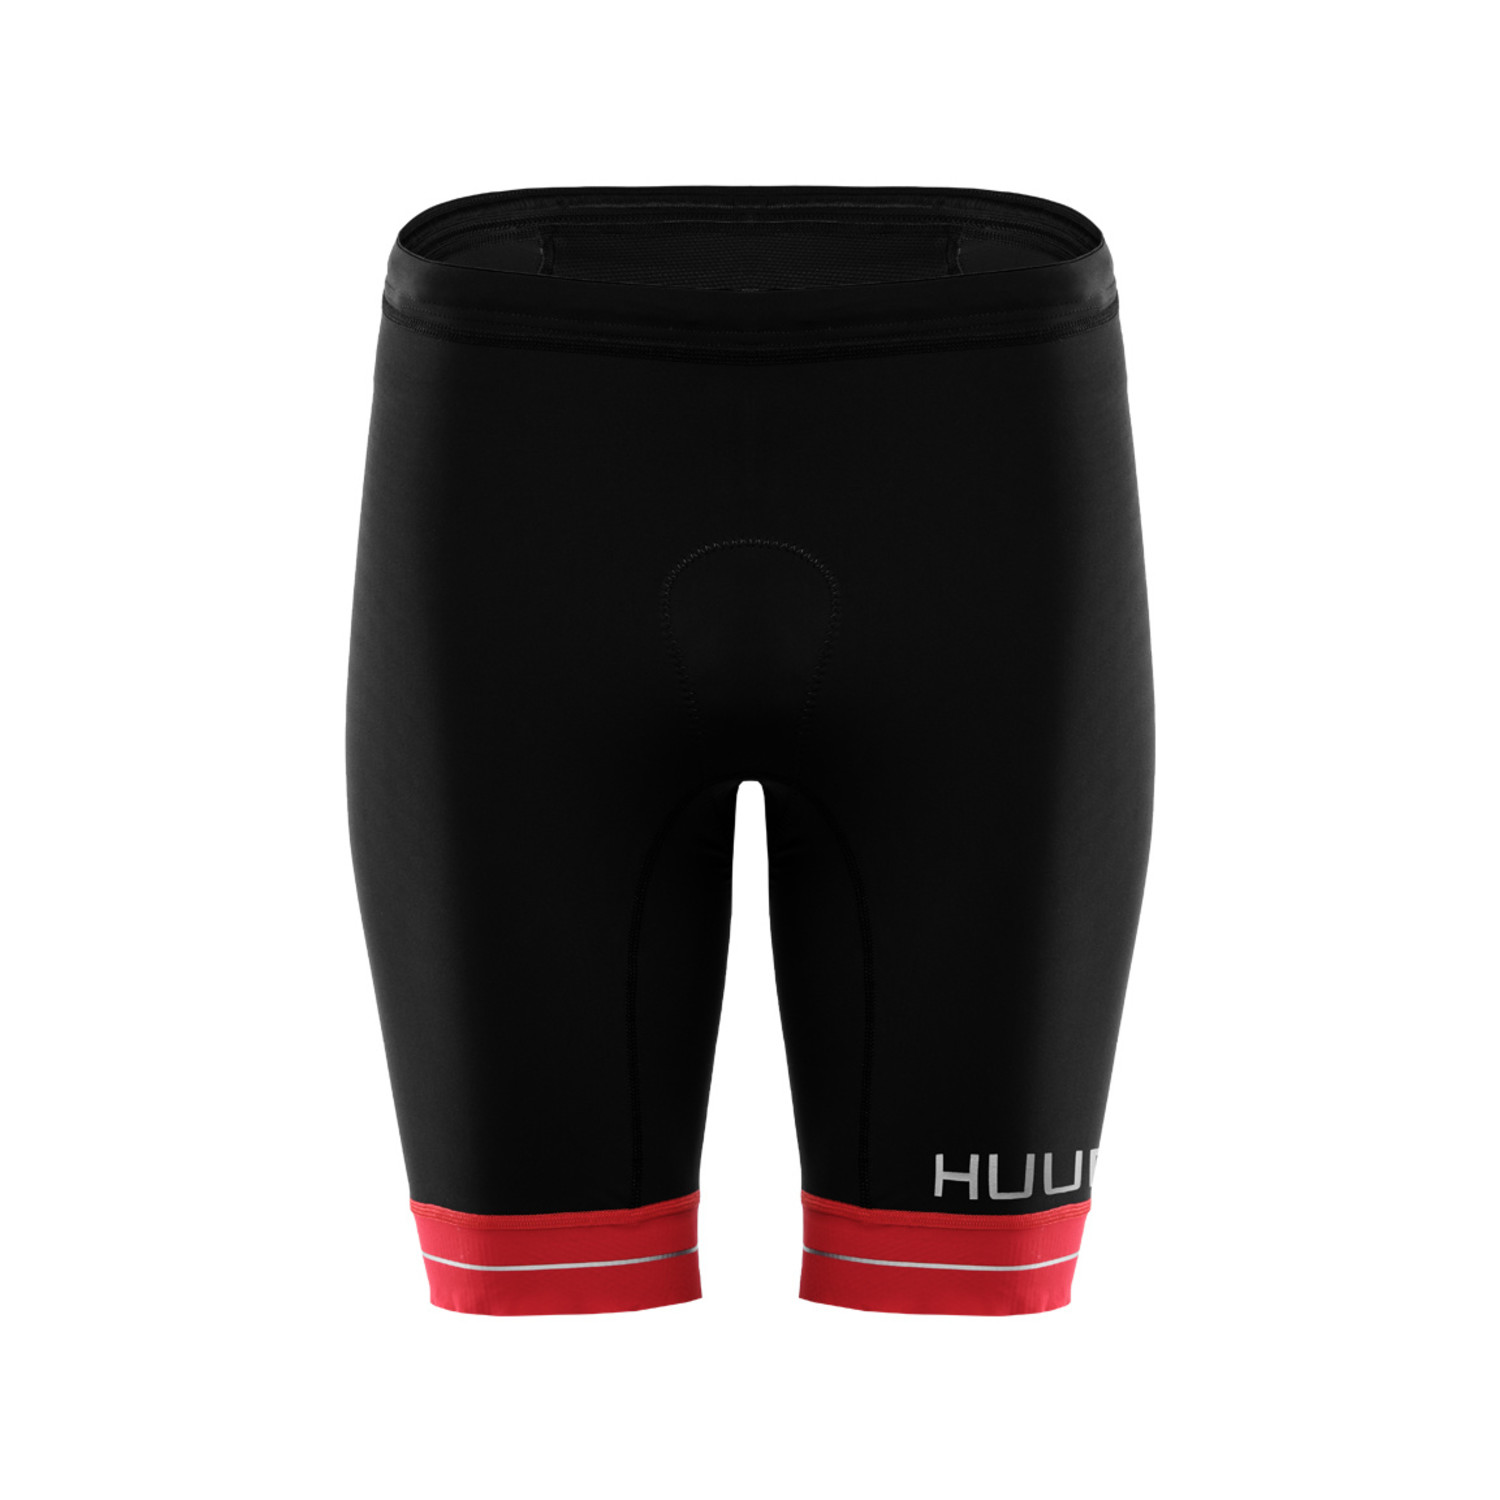 Huub Race Tri Short Heren black/red. Triathlonwinkel.nl Uden -  Triathlonwinkel